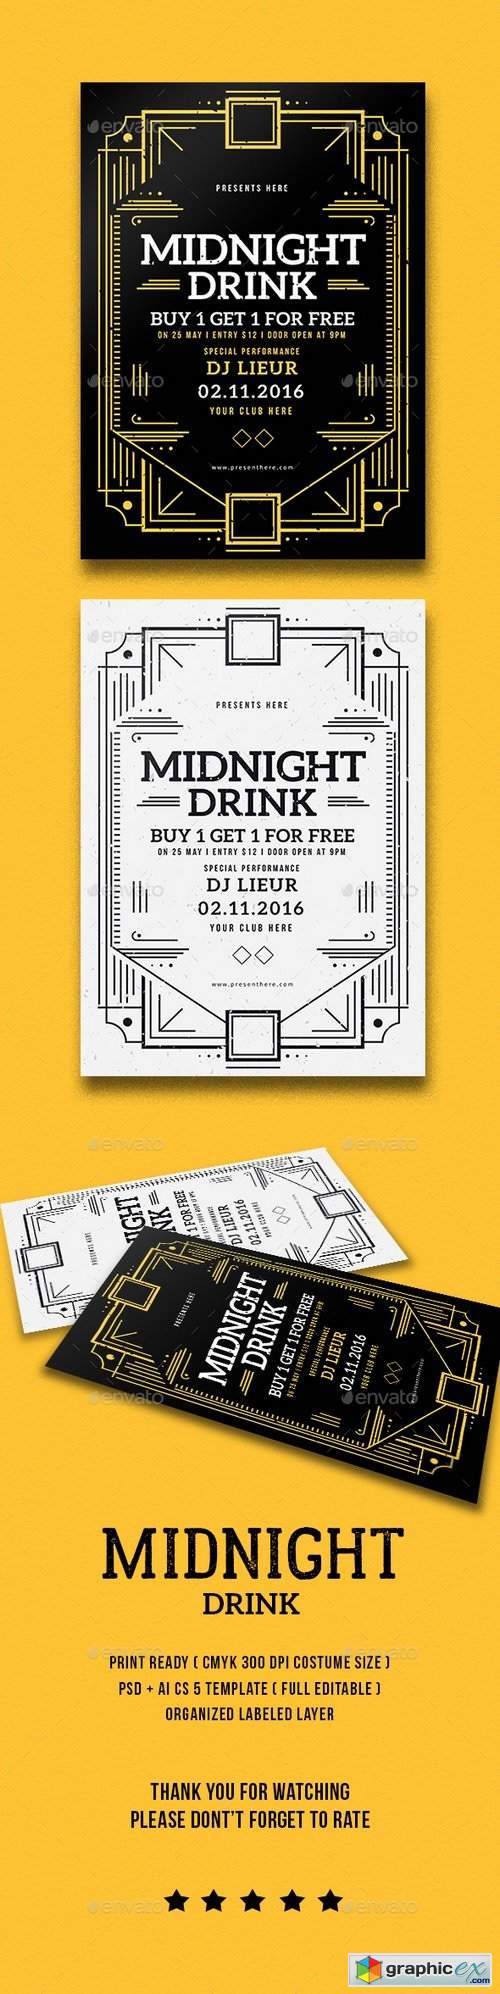 Midnight Drink Flyer